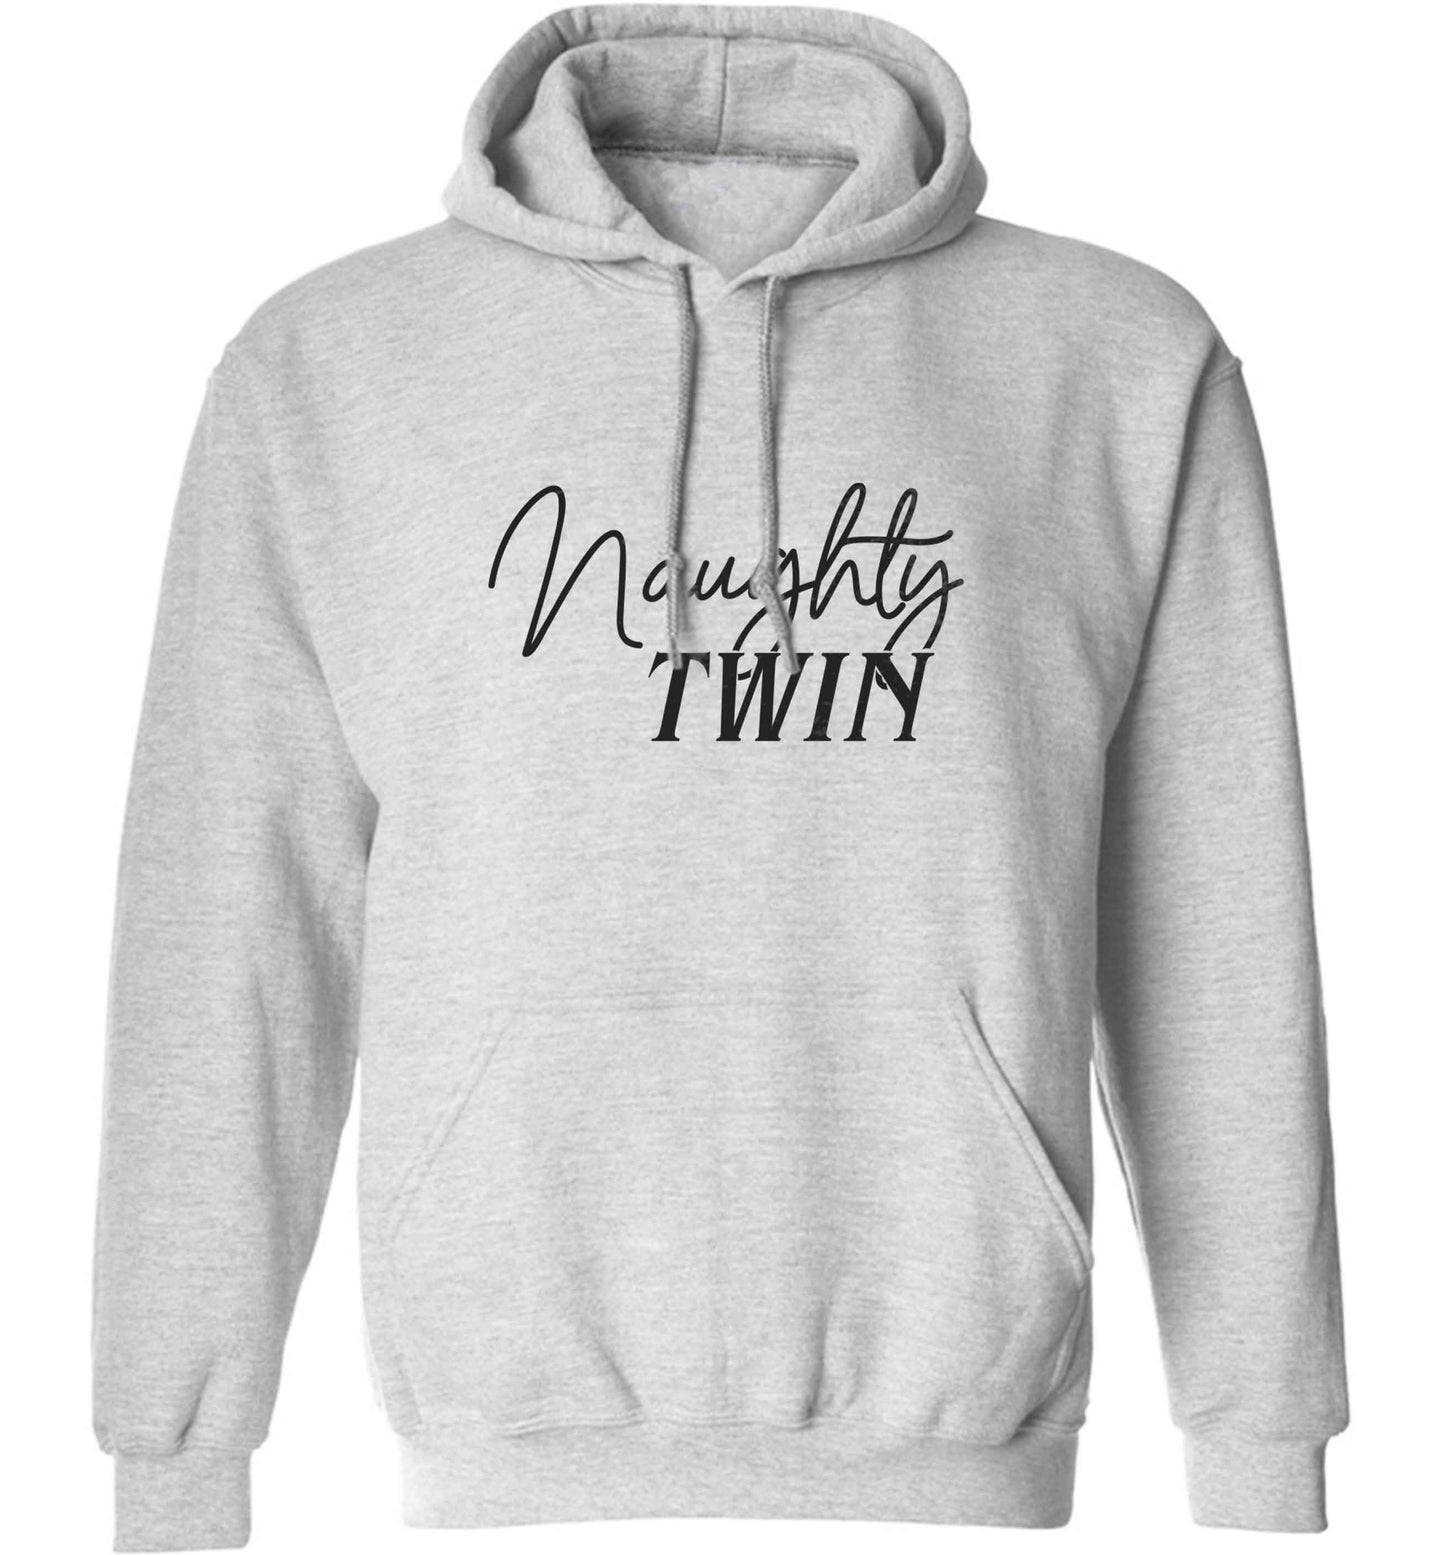 Naughty twin adults unisex grey hoodie 2XL